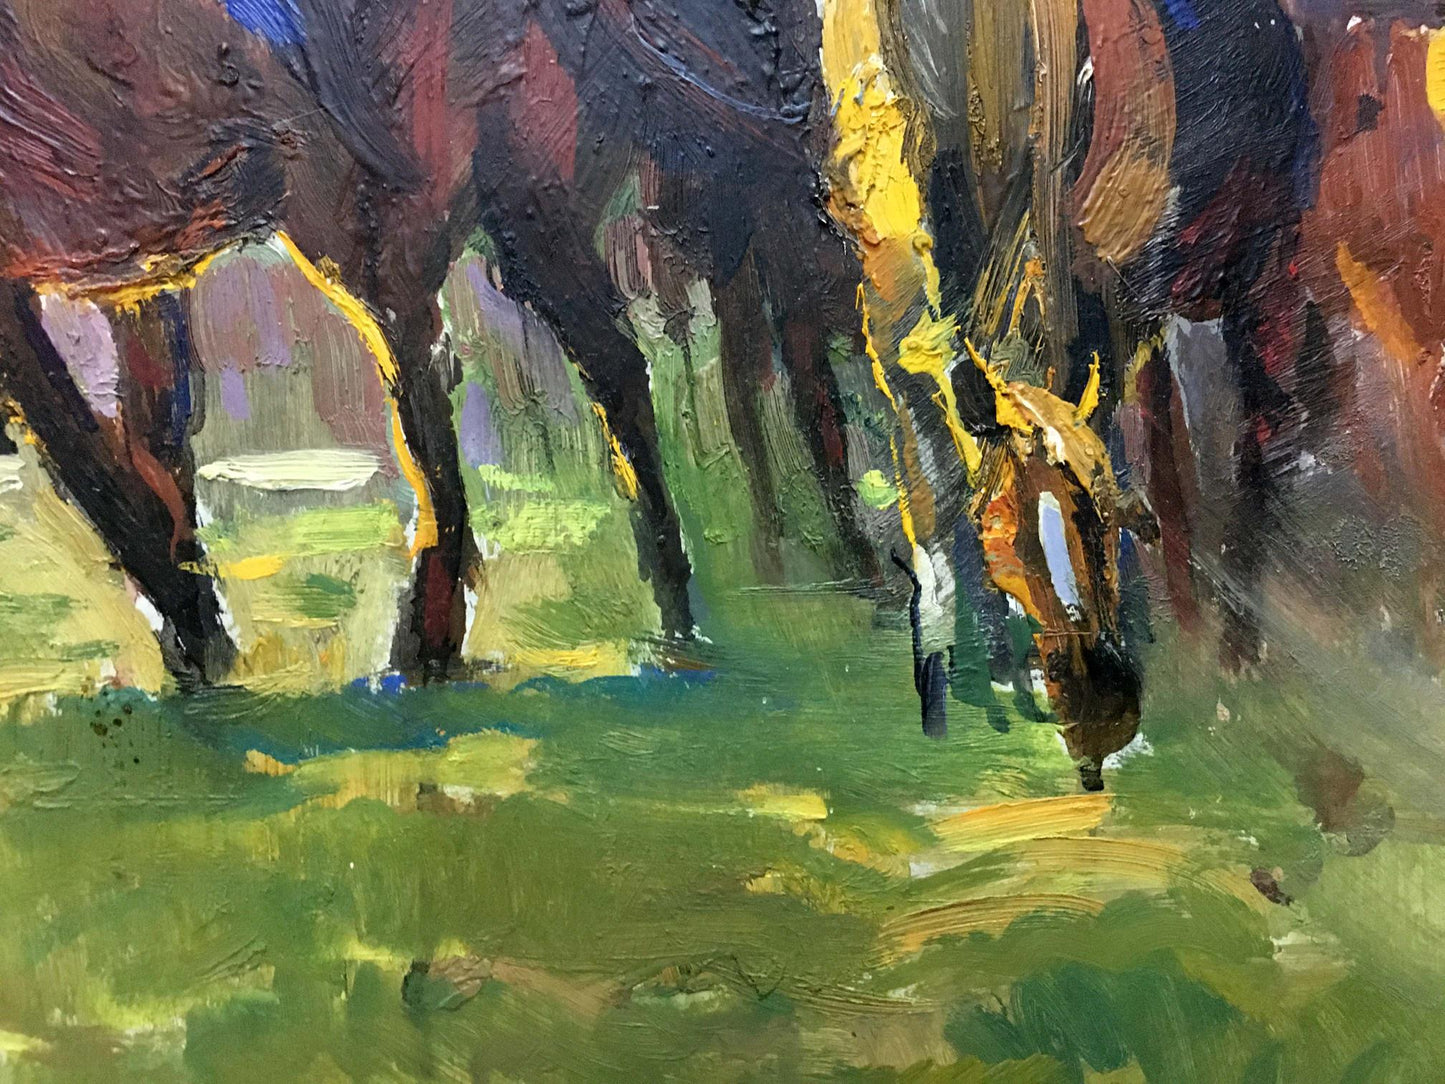 Oil painting Horse portrait Unknown artist